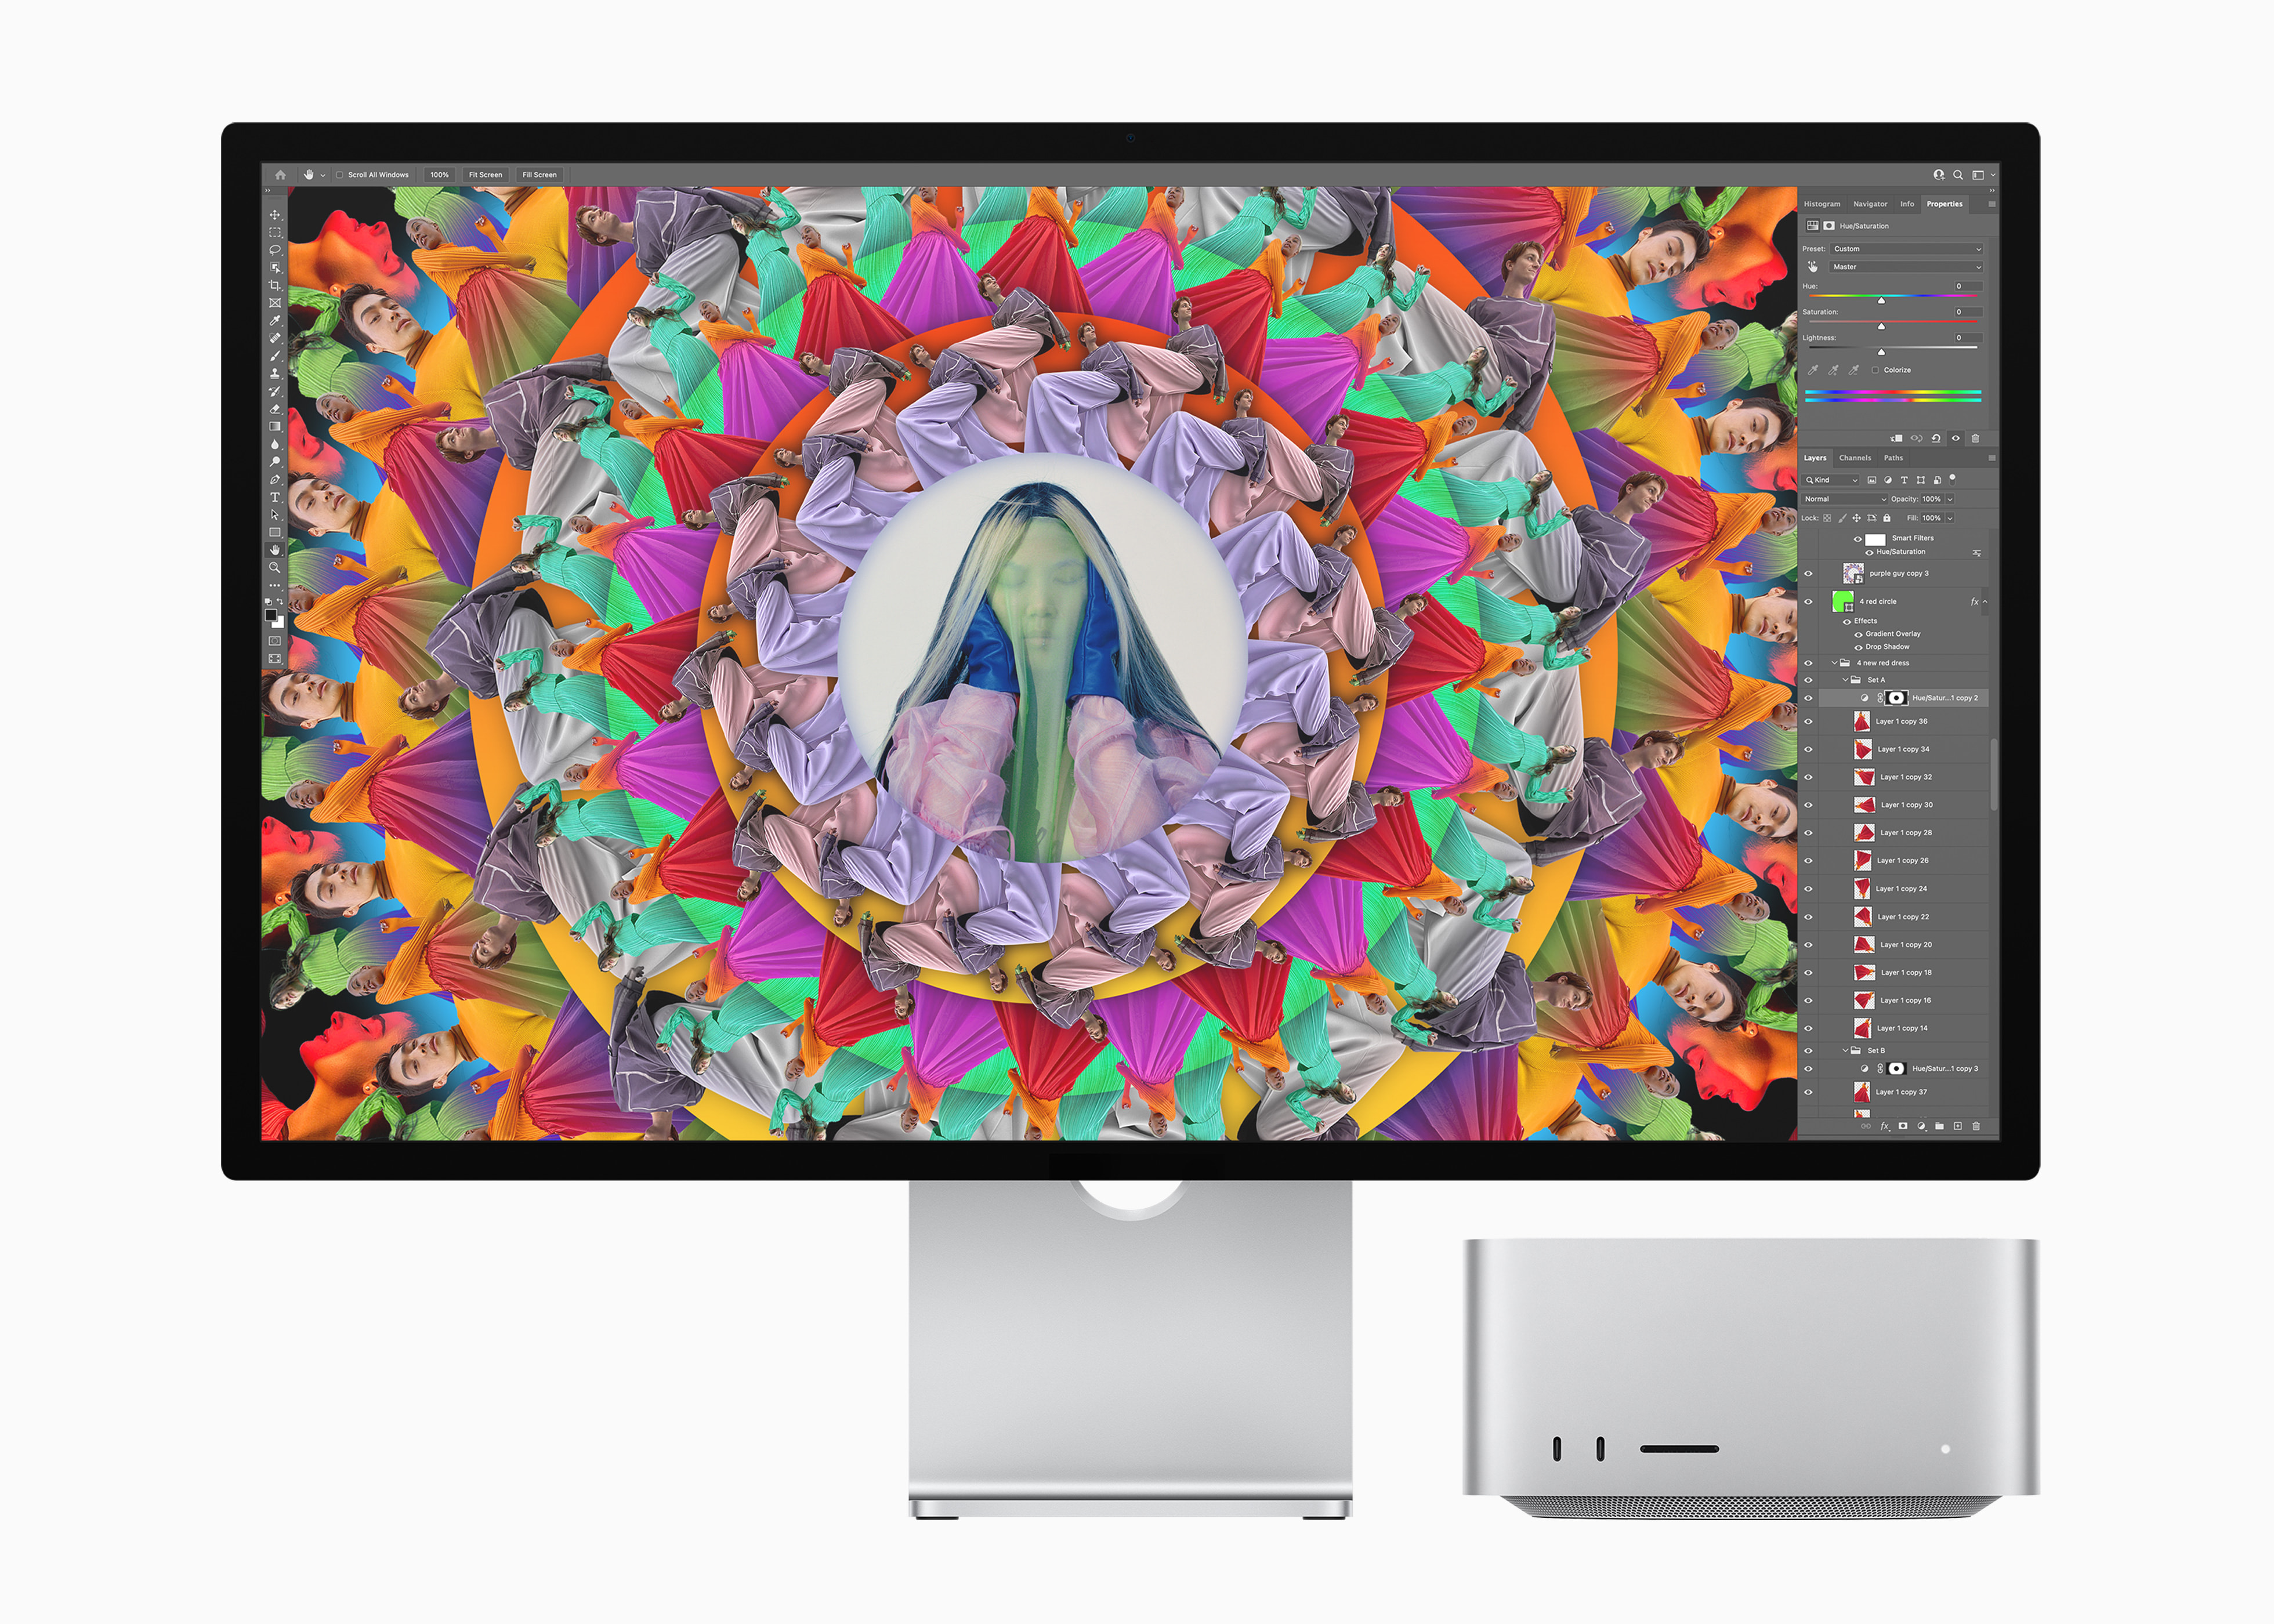 Mac Studio: Release date, price, specs and design